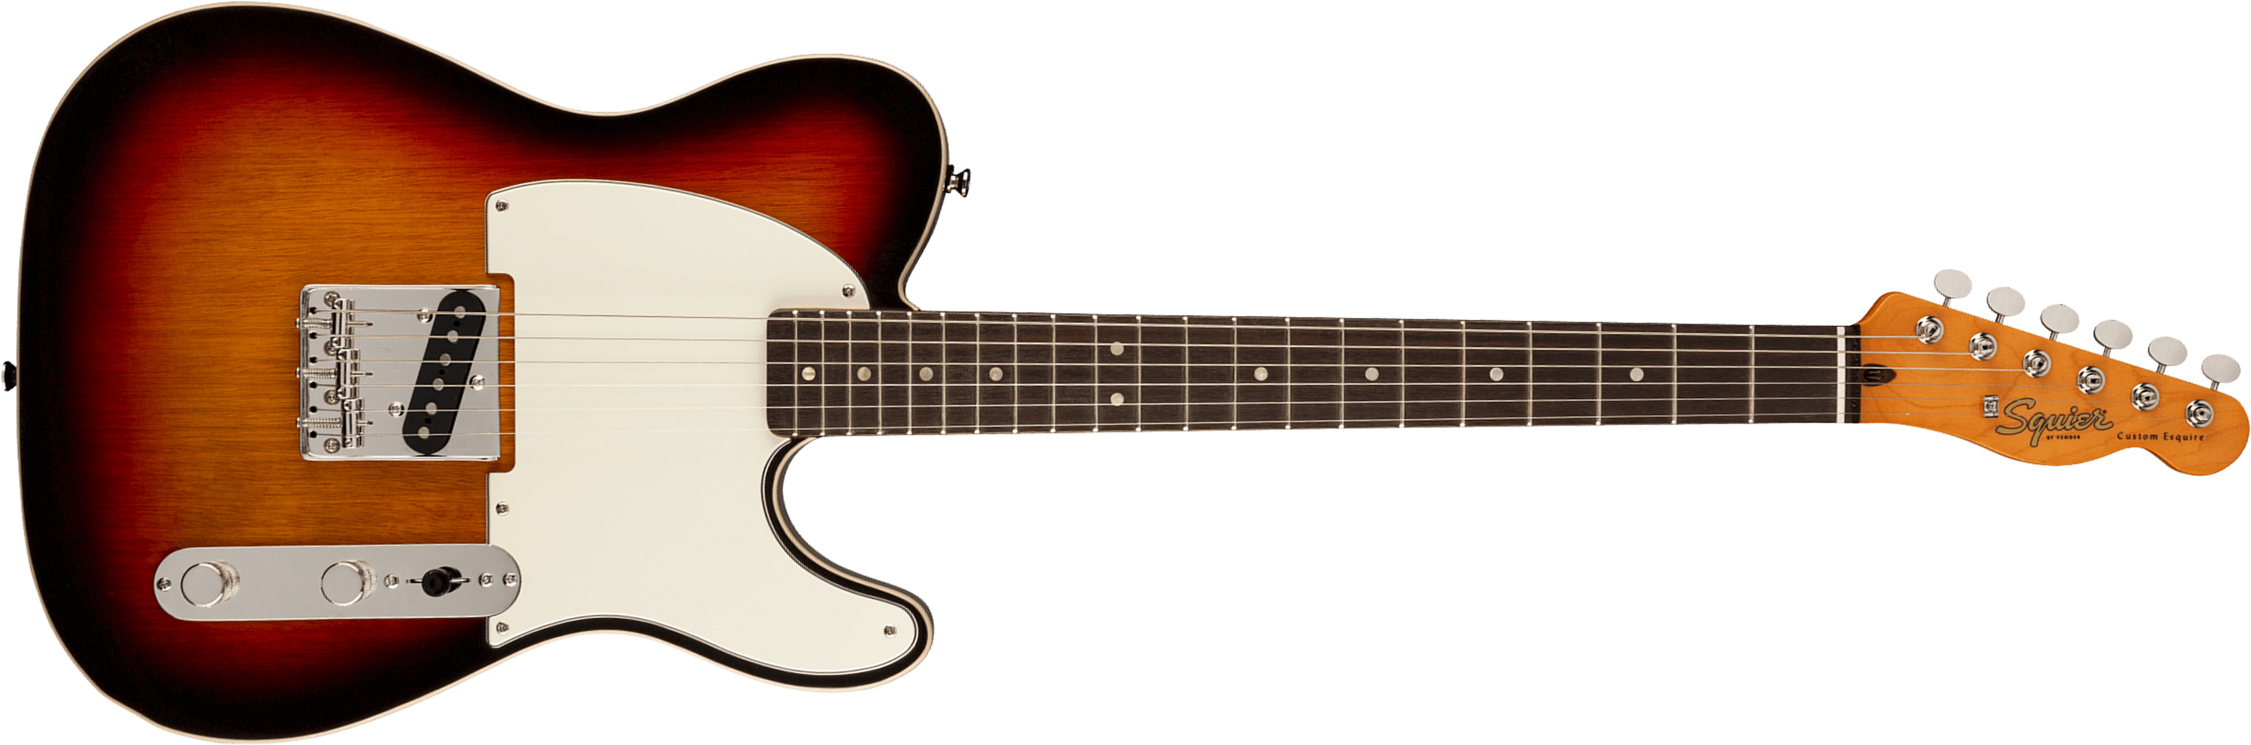 Squier Esquire Tele '60s Custom Classic Vibe Fsr Ltd Lau - 3 Color Sunburst - Tel shape electric guitar - Main picture